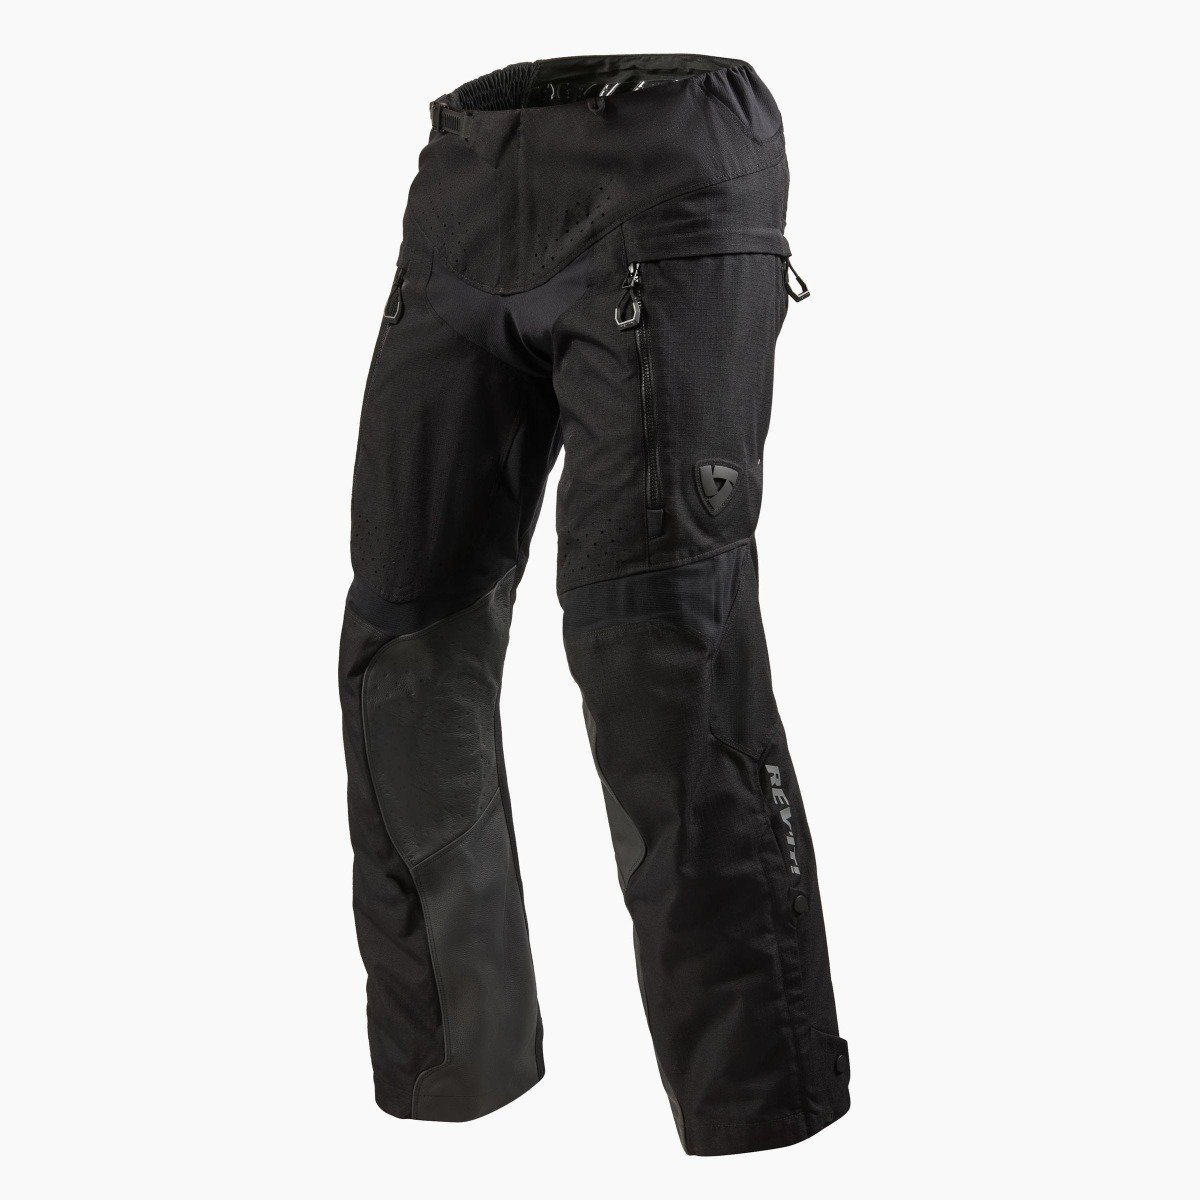 Image of REV'IT! Continent Short Black Motorcycle Pants Talla XL